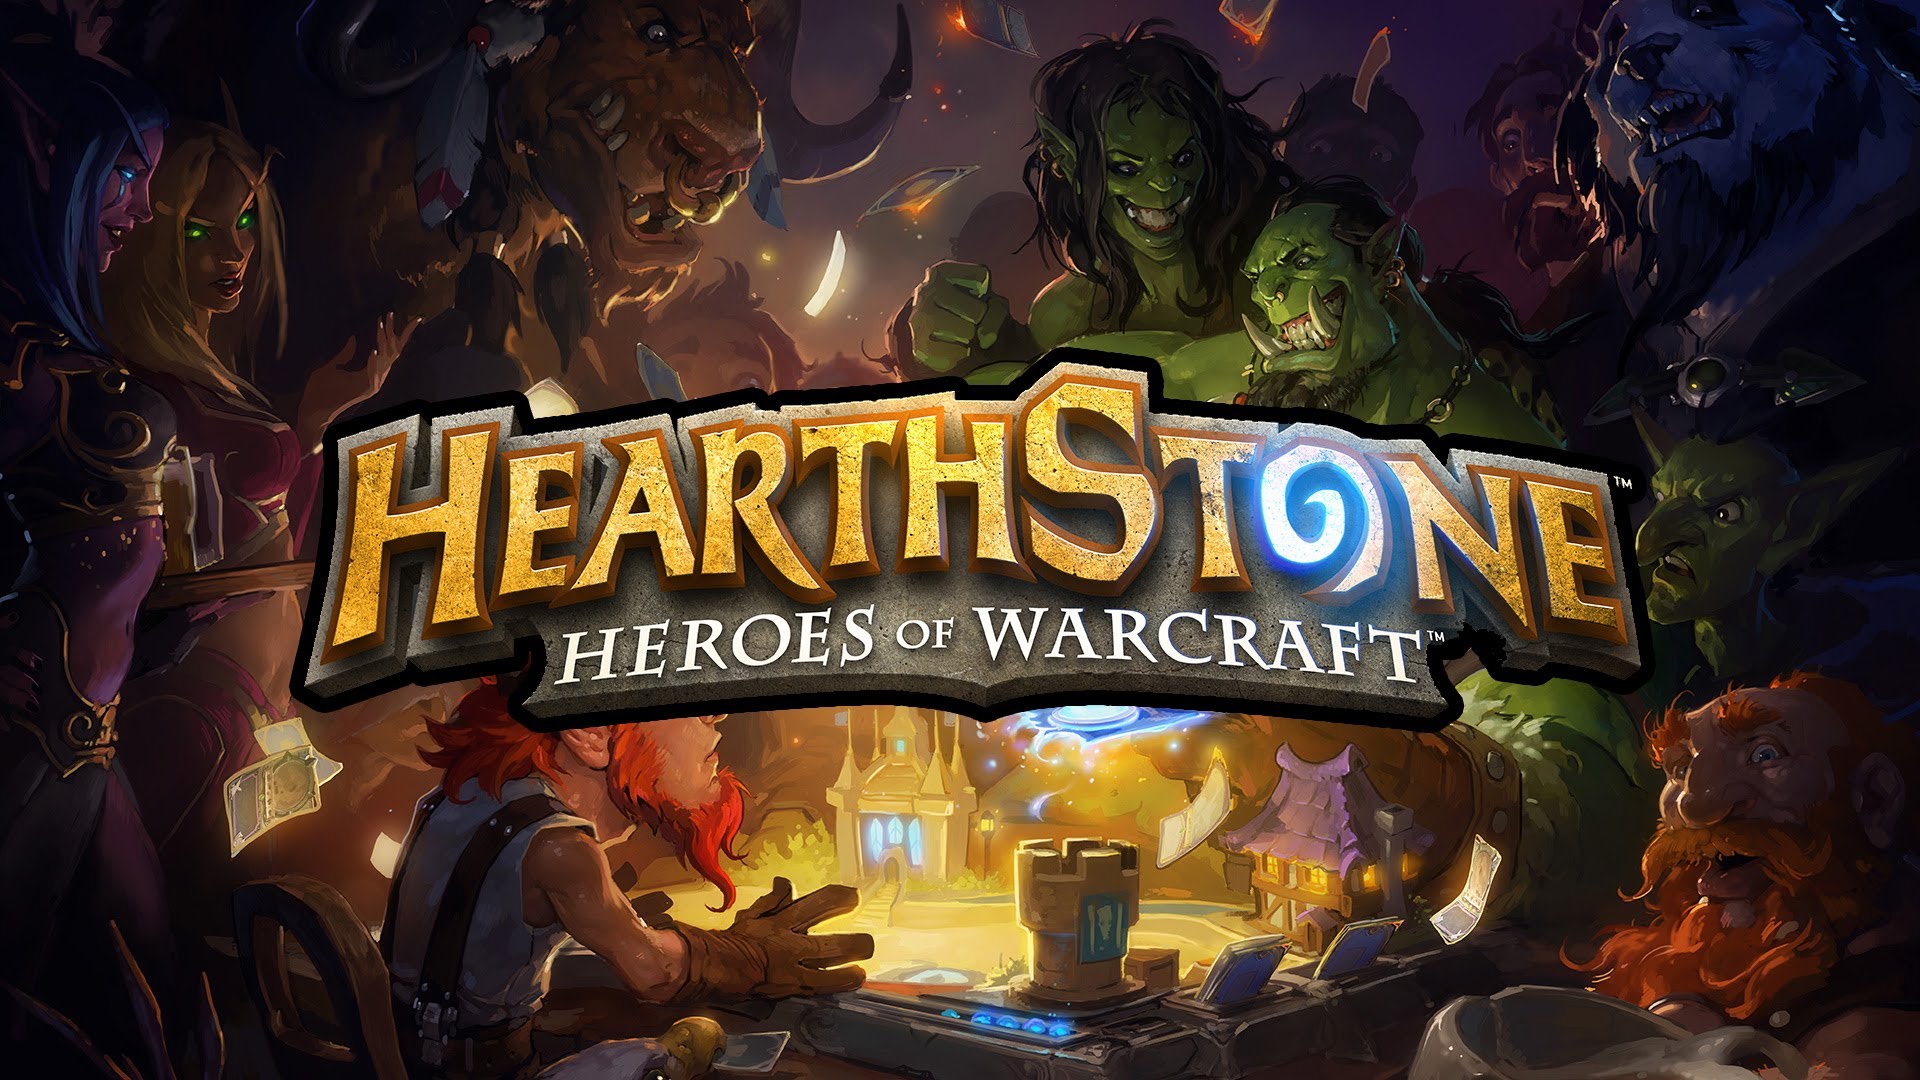 Hearthstone: Heroes of Warcraf